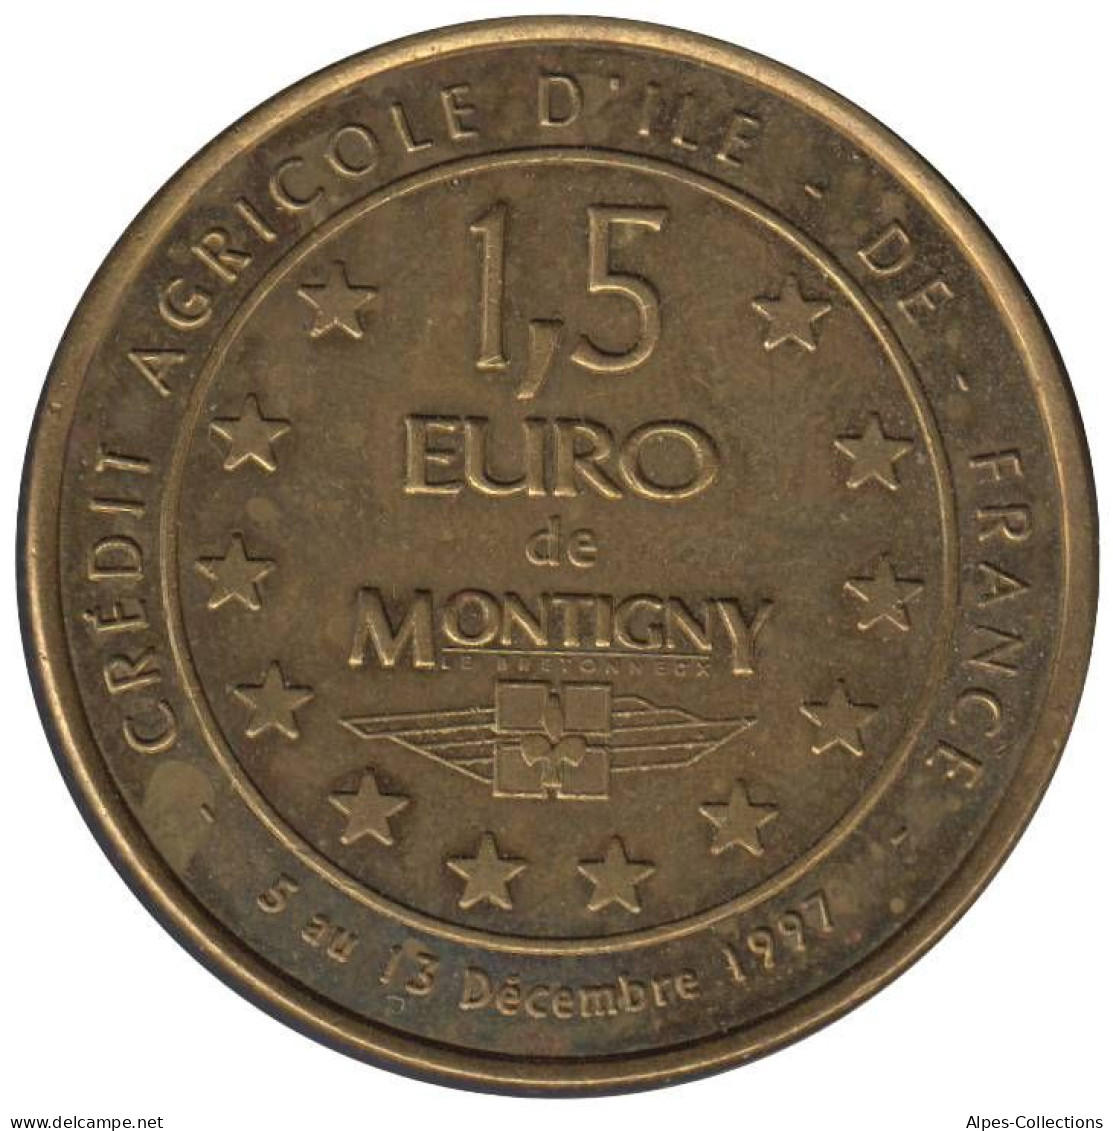 MONTIGNY - EU0015.1 - 1,5 EURO DES VILLES - Réf: NR - 1997 - Euro Der Städte